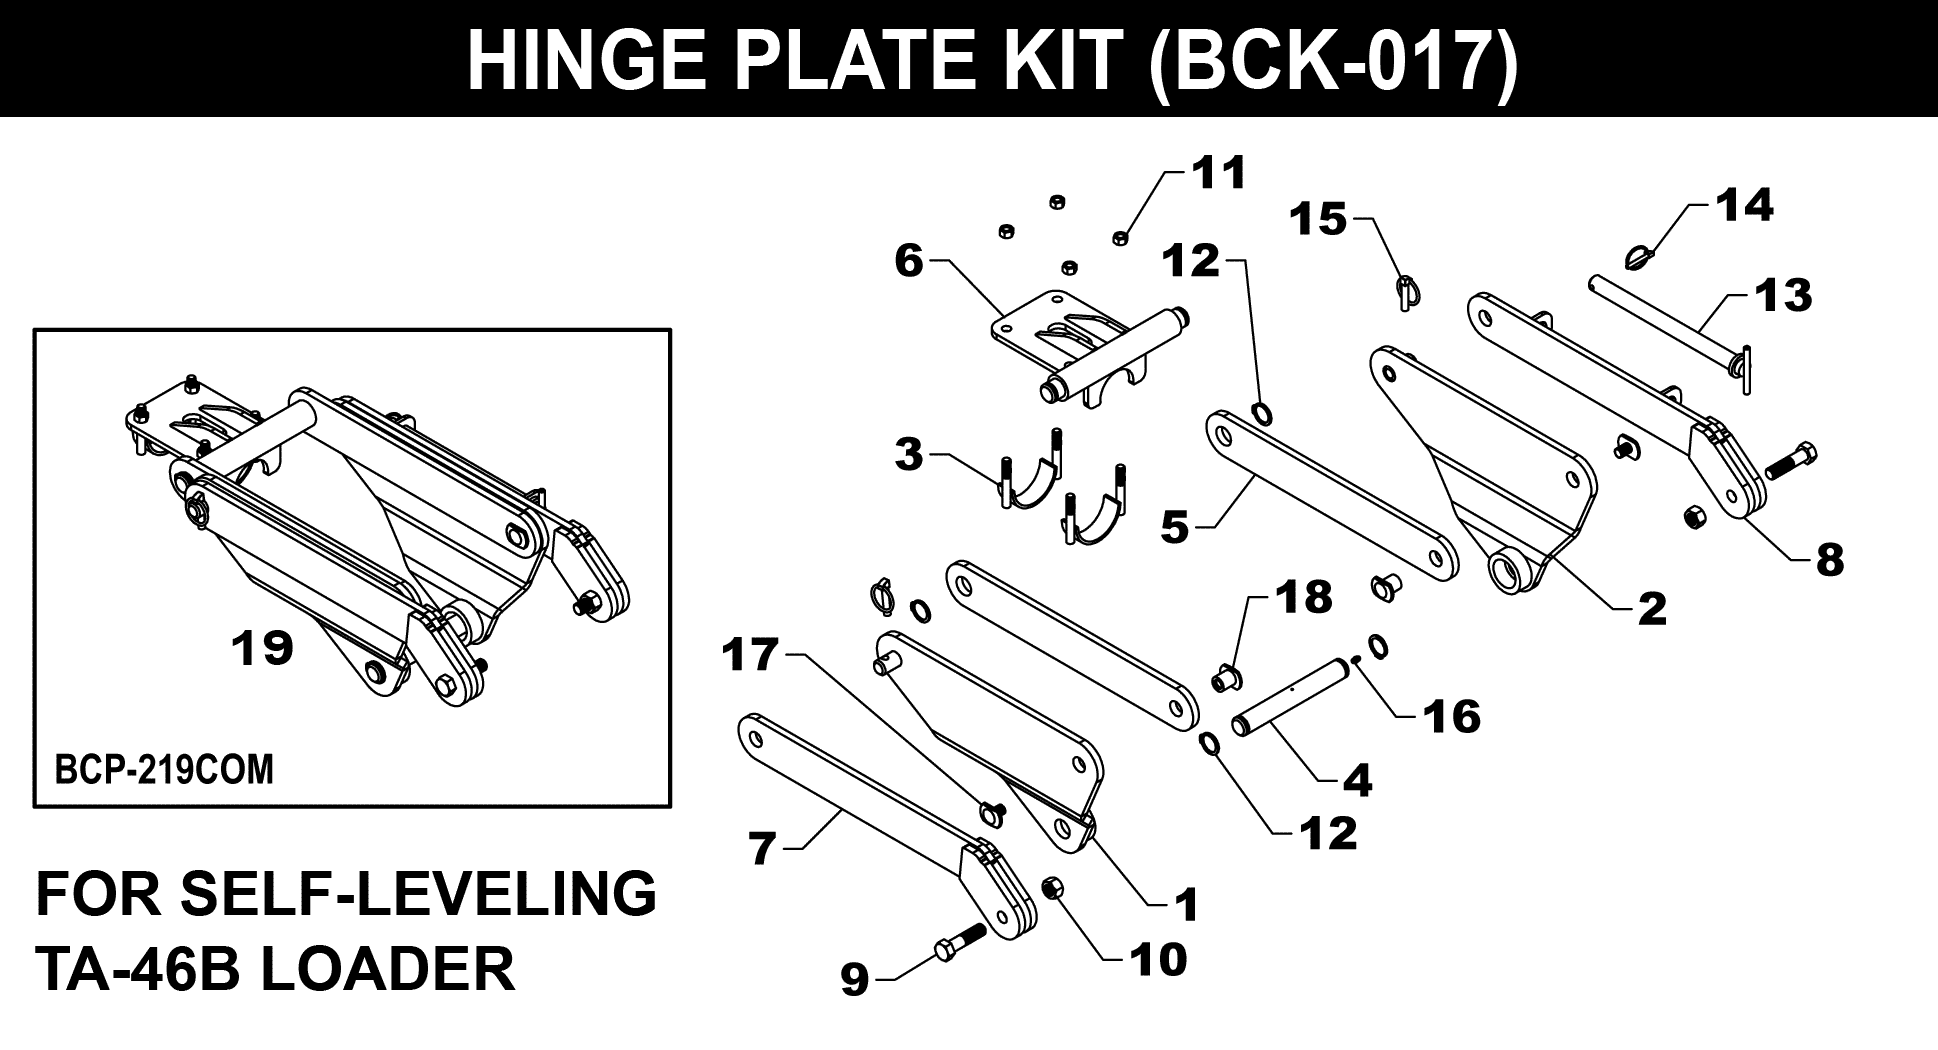 BCK-017 Hinge Plate Kit